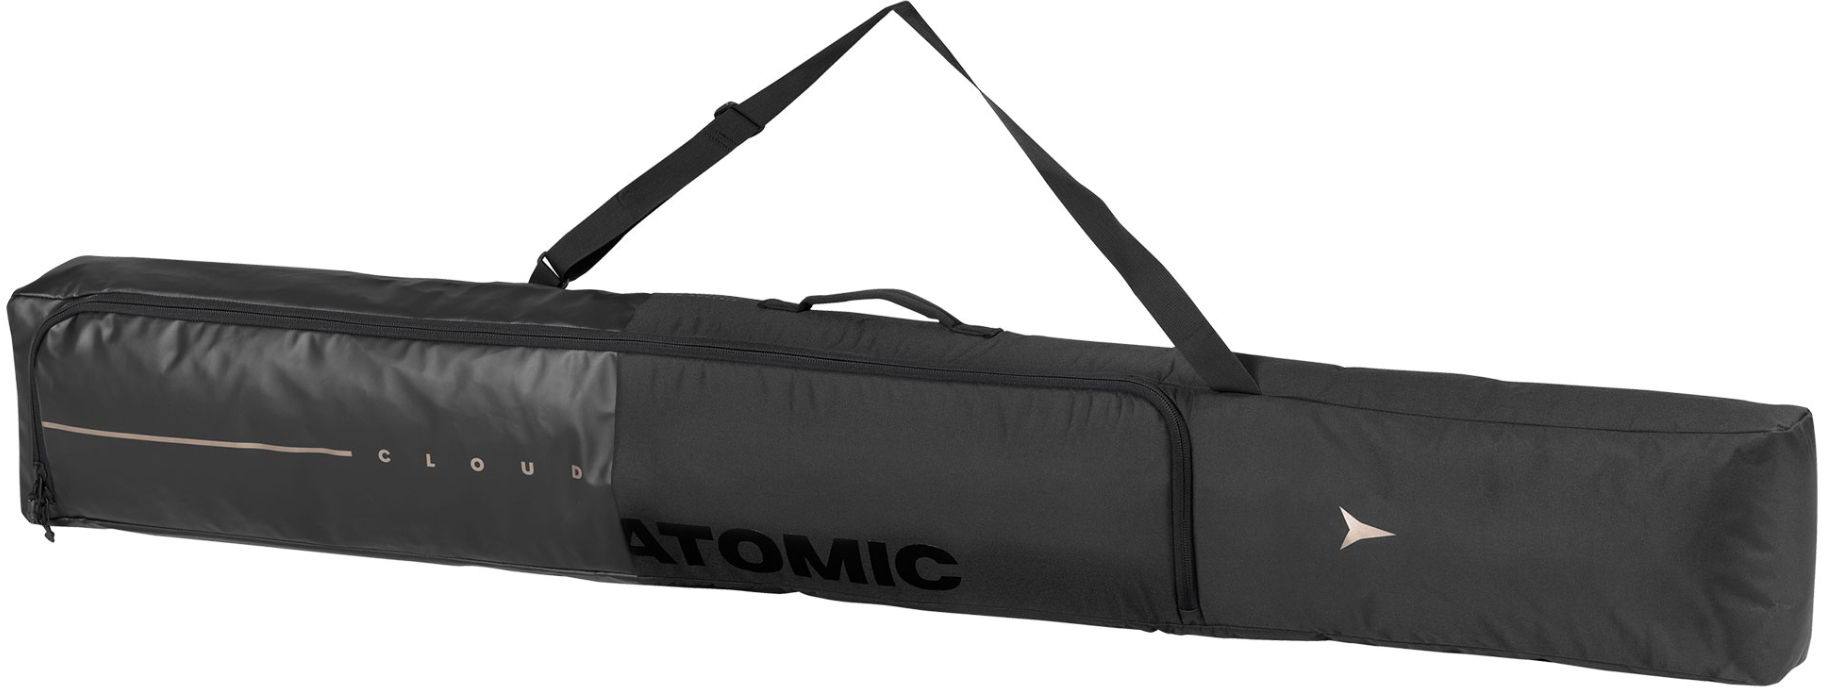 Atomic Ski Bag Cloud W 21/22 Black